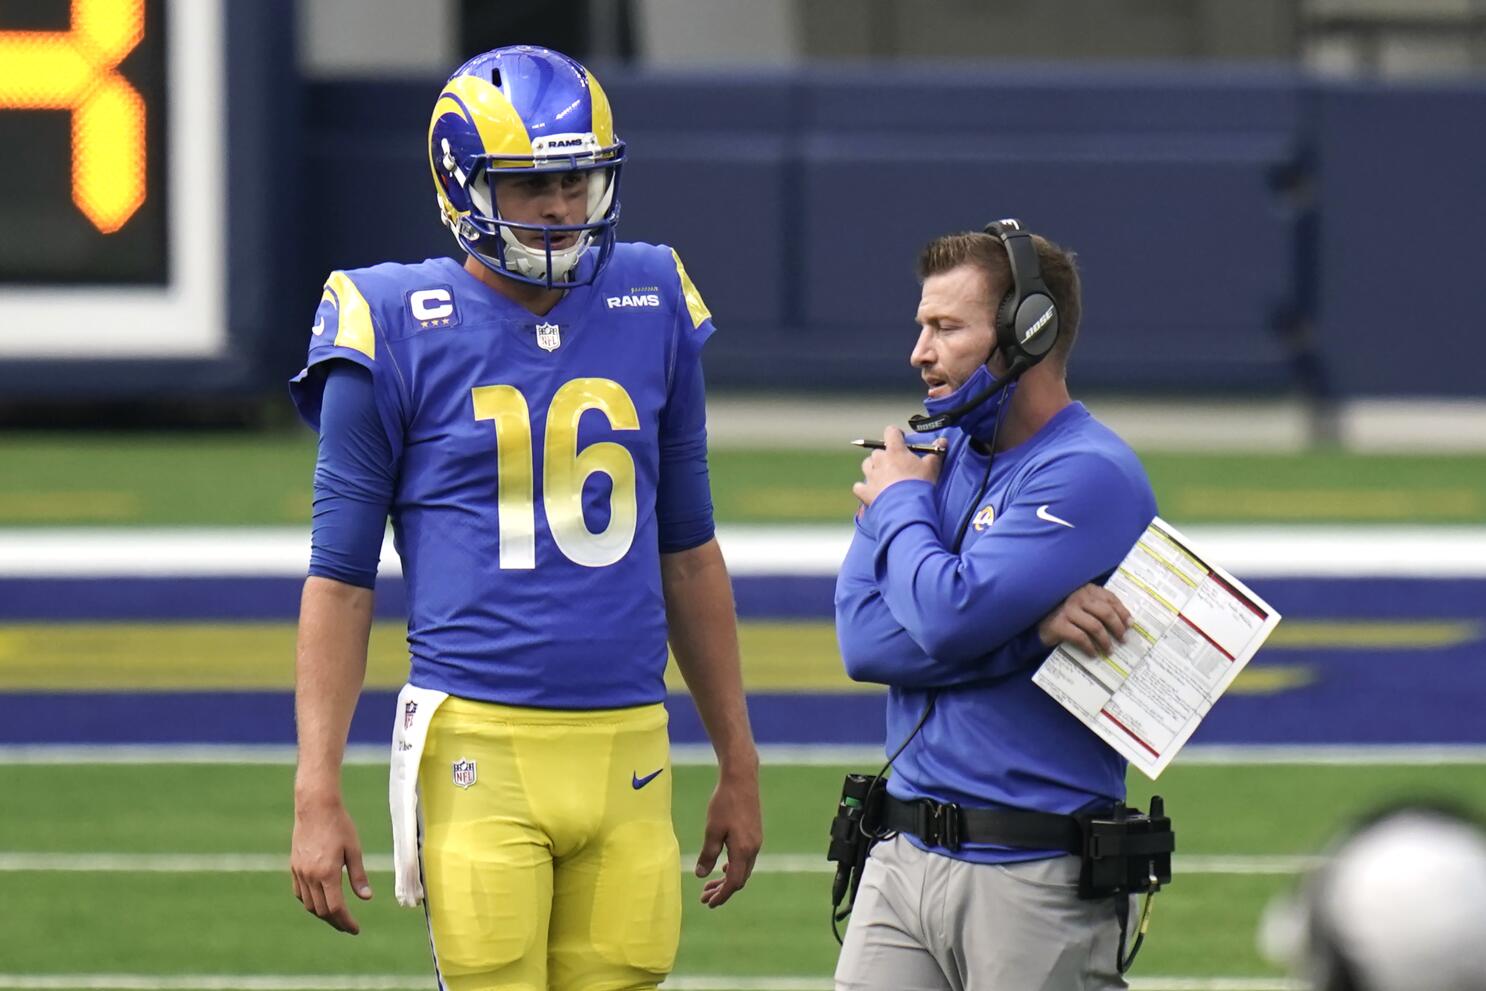 Plaschke: Rams quarterback Jared Goff plays past pain, doubt - Los